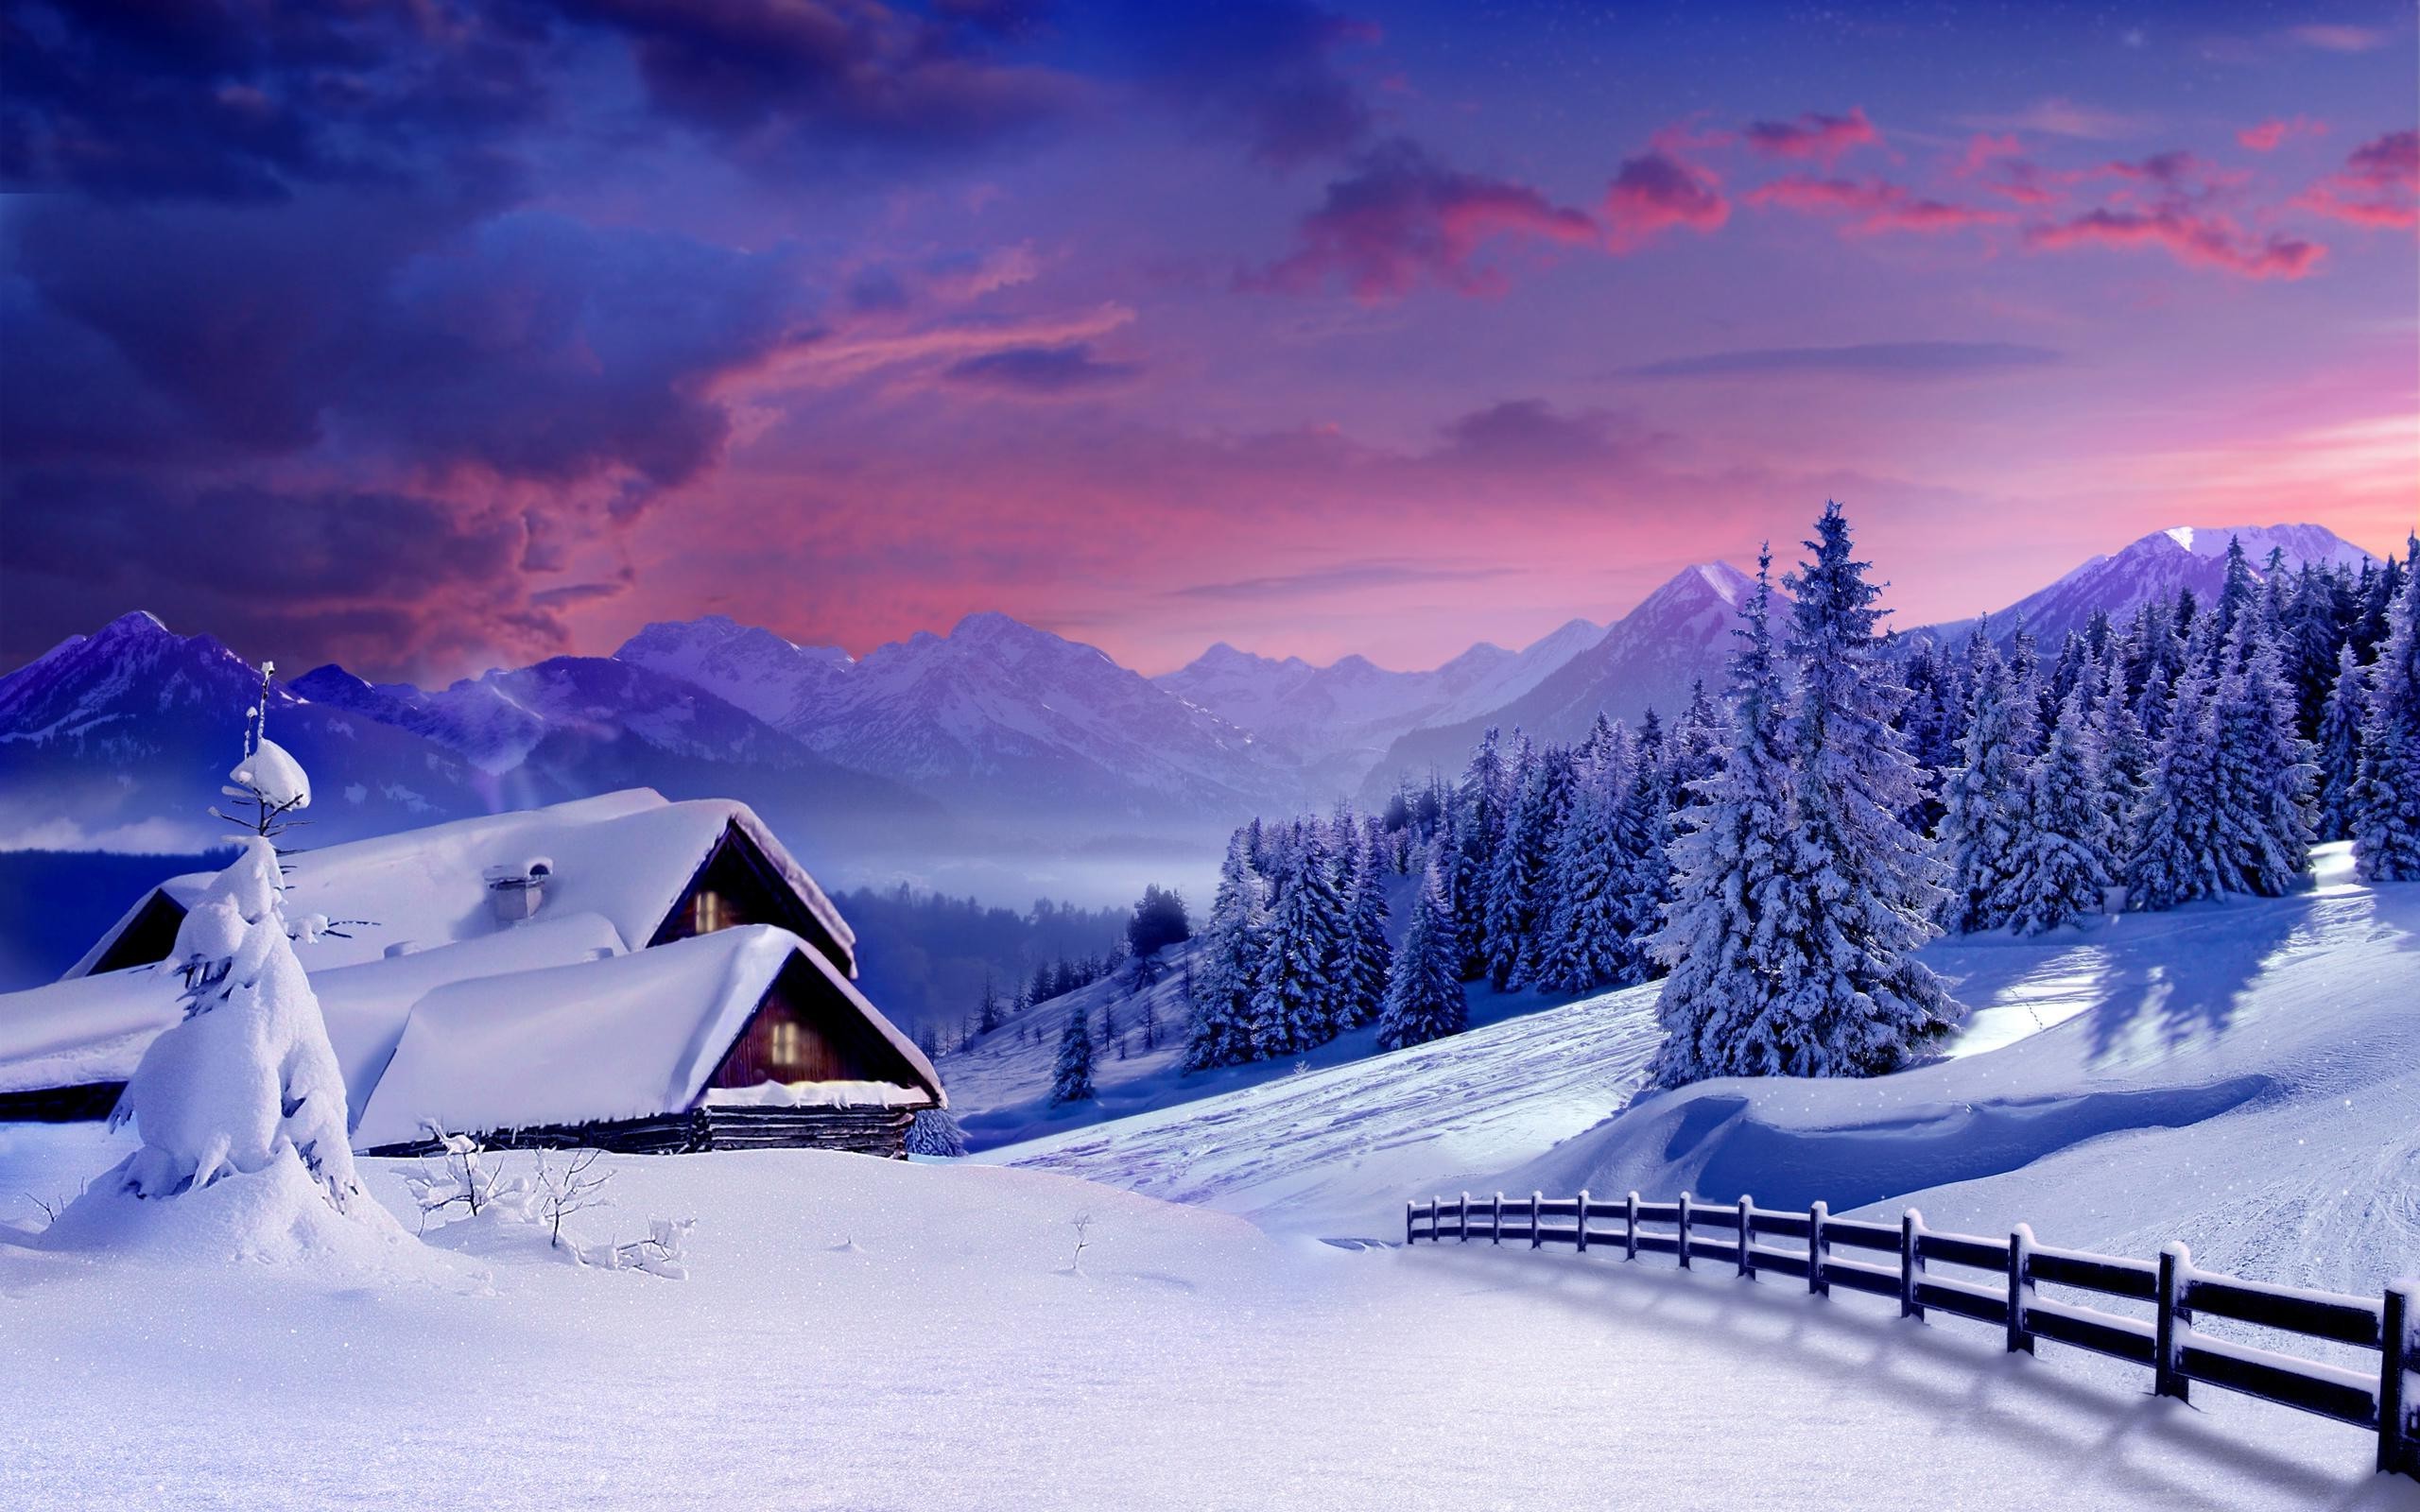 landscape-winter-snow-mountain-trees-sky-cabin-wallpapers-hd